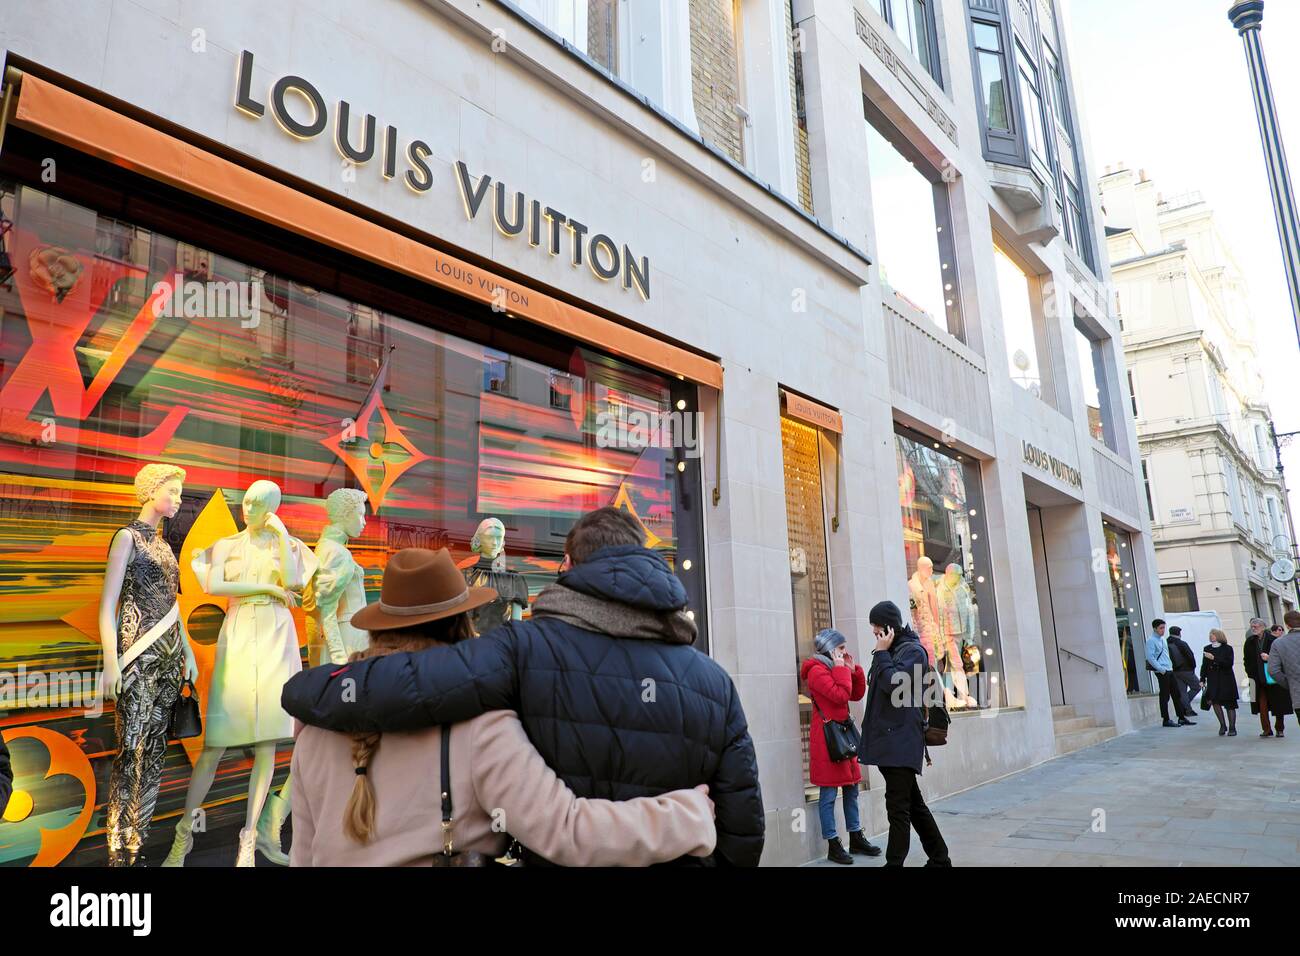 Tienda Louis Vuitton New Bond Street en Londres England Reino